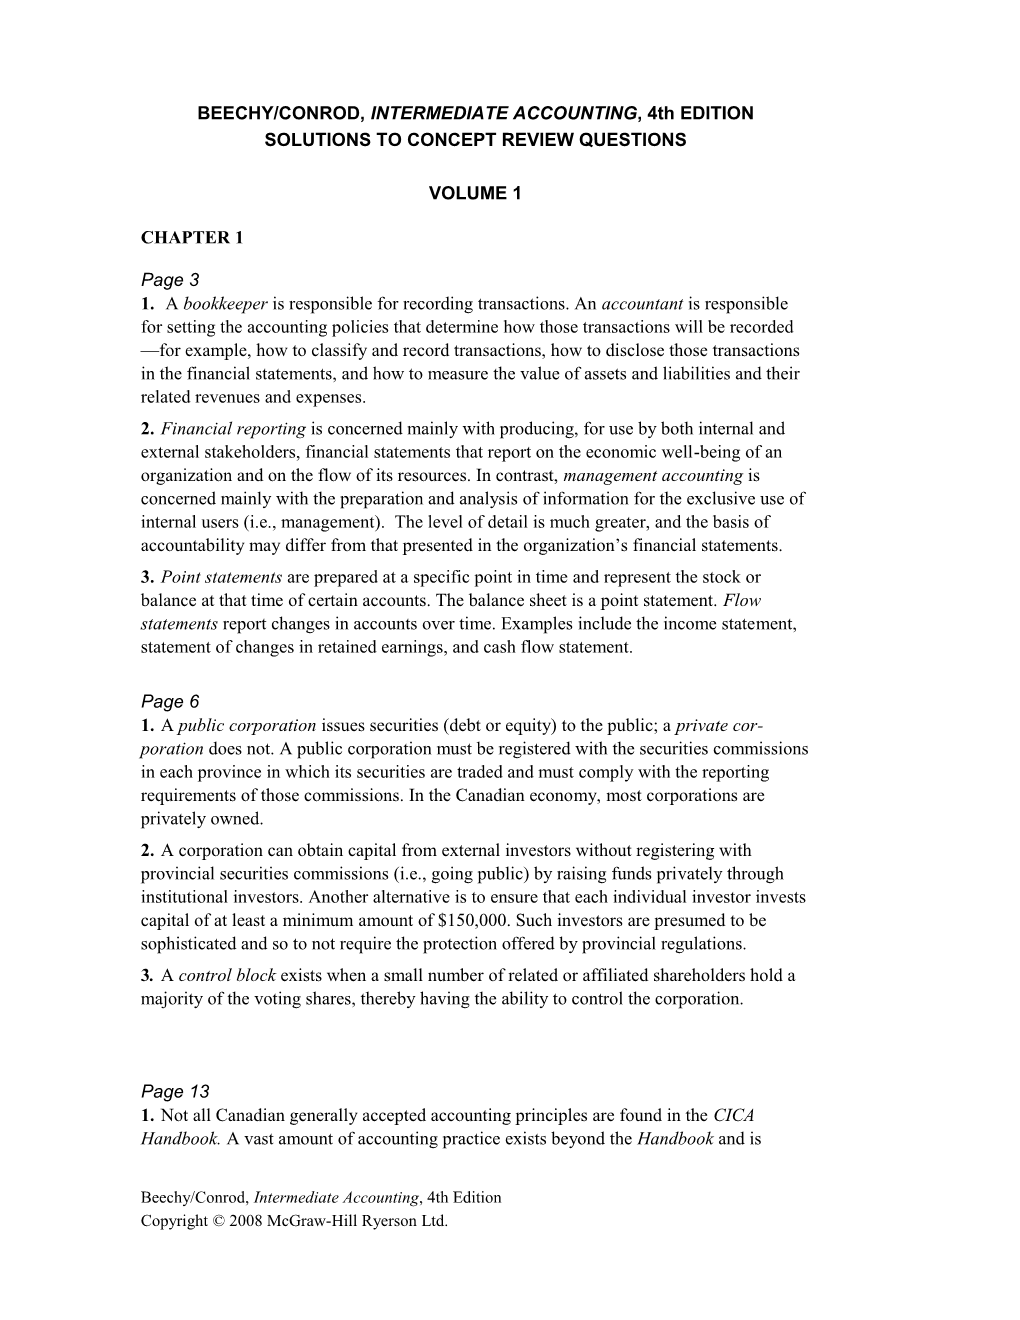 Beechy/Conrod, Intermediate Accounting, 3Rd Edition